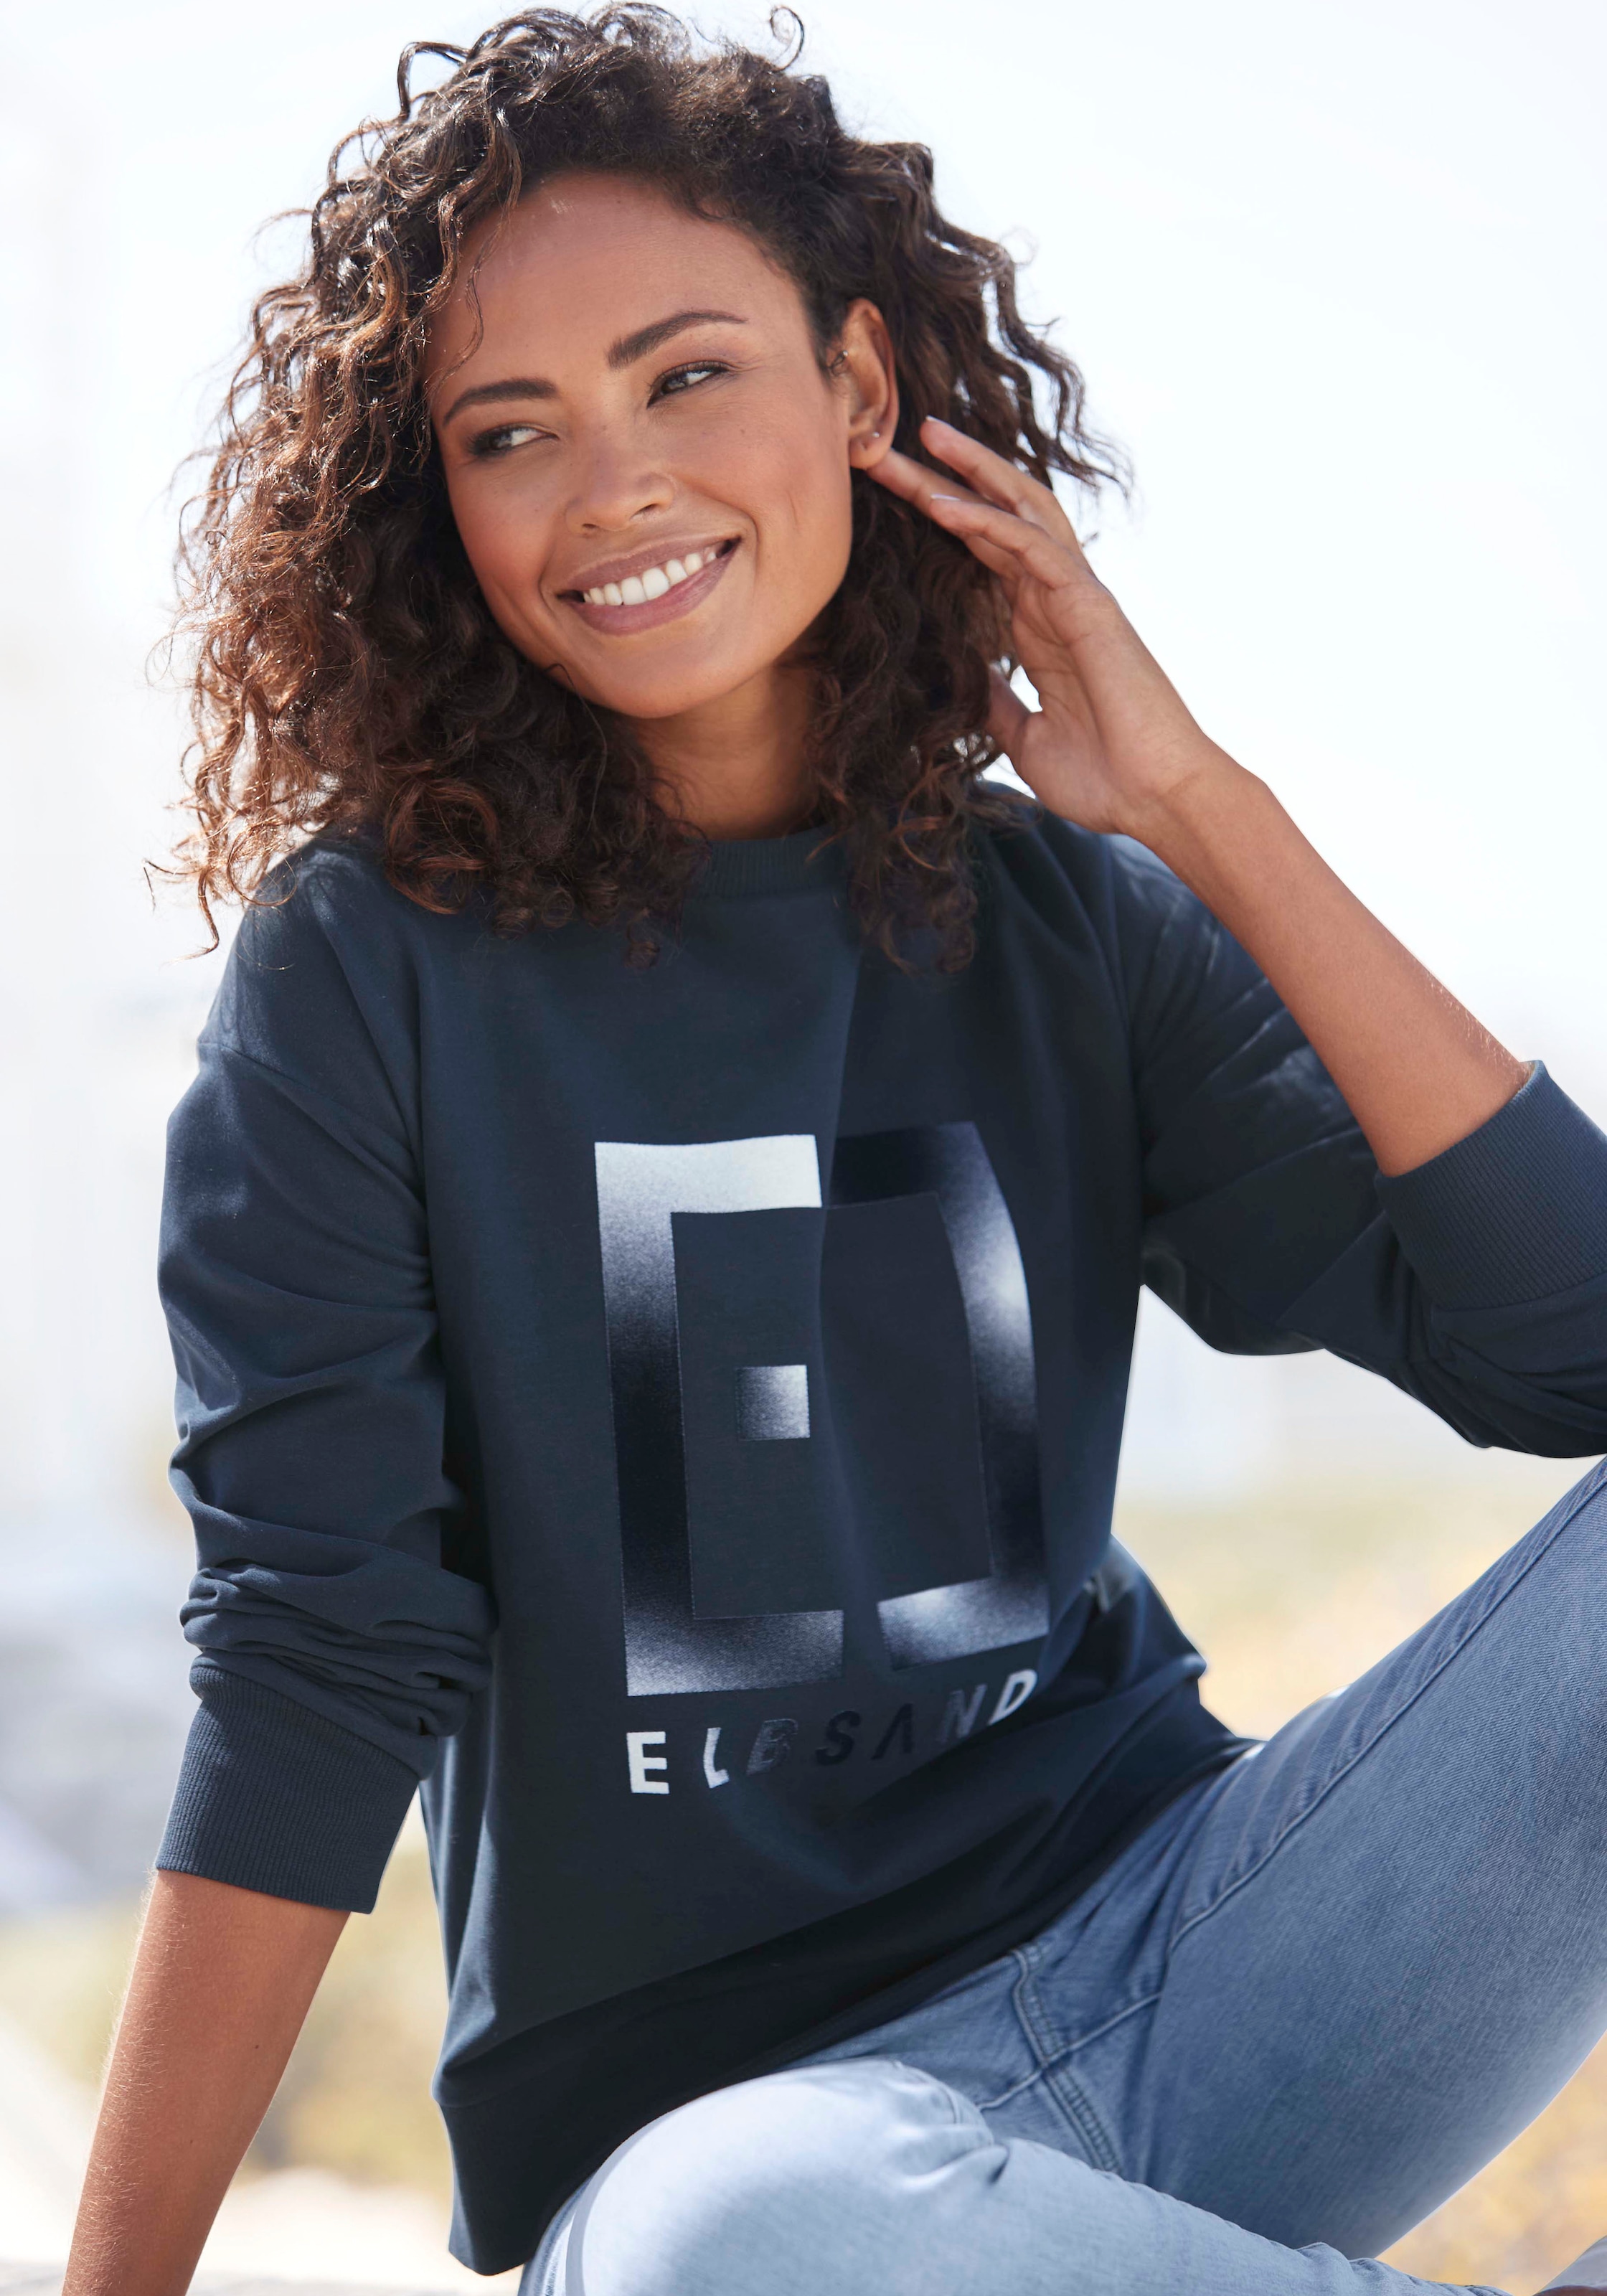 Elbsand Sweatshirt »Fionni«, mit grossem Logoprint, sportlich-casual